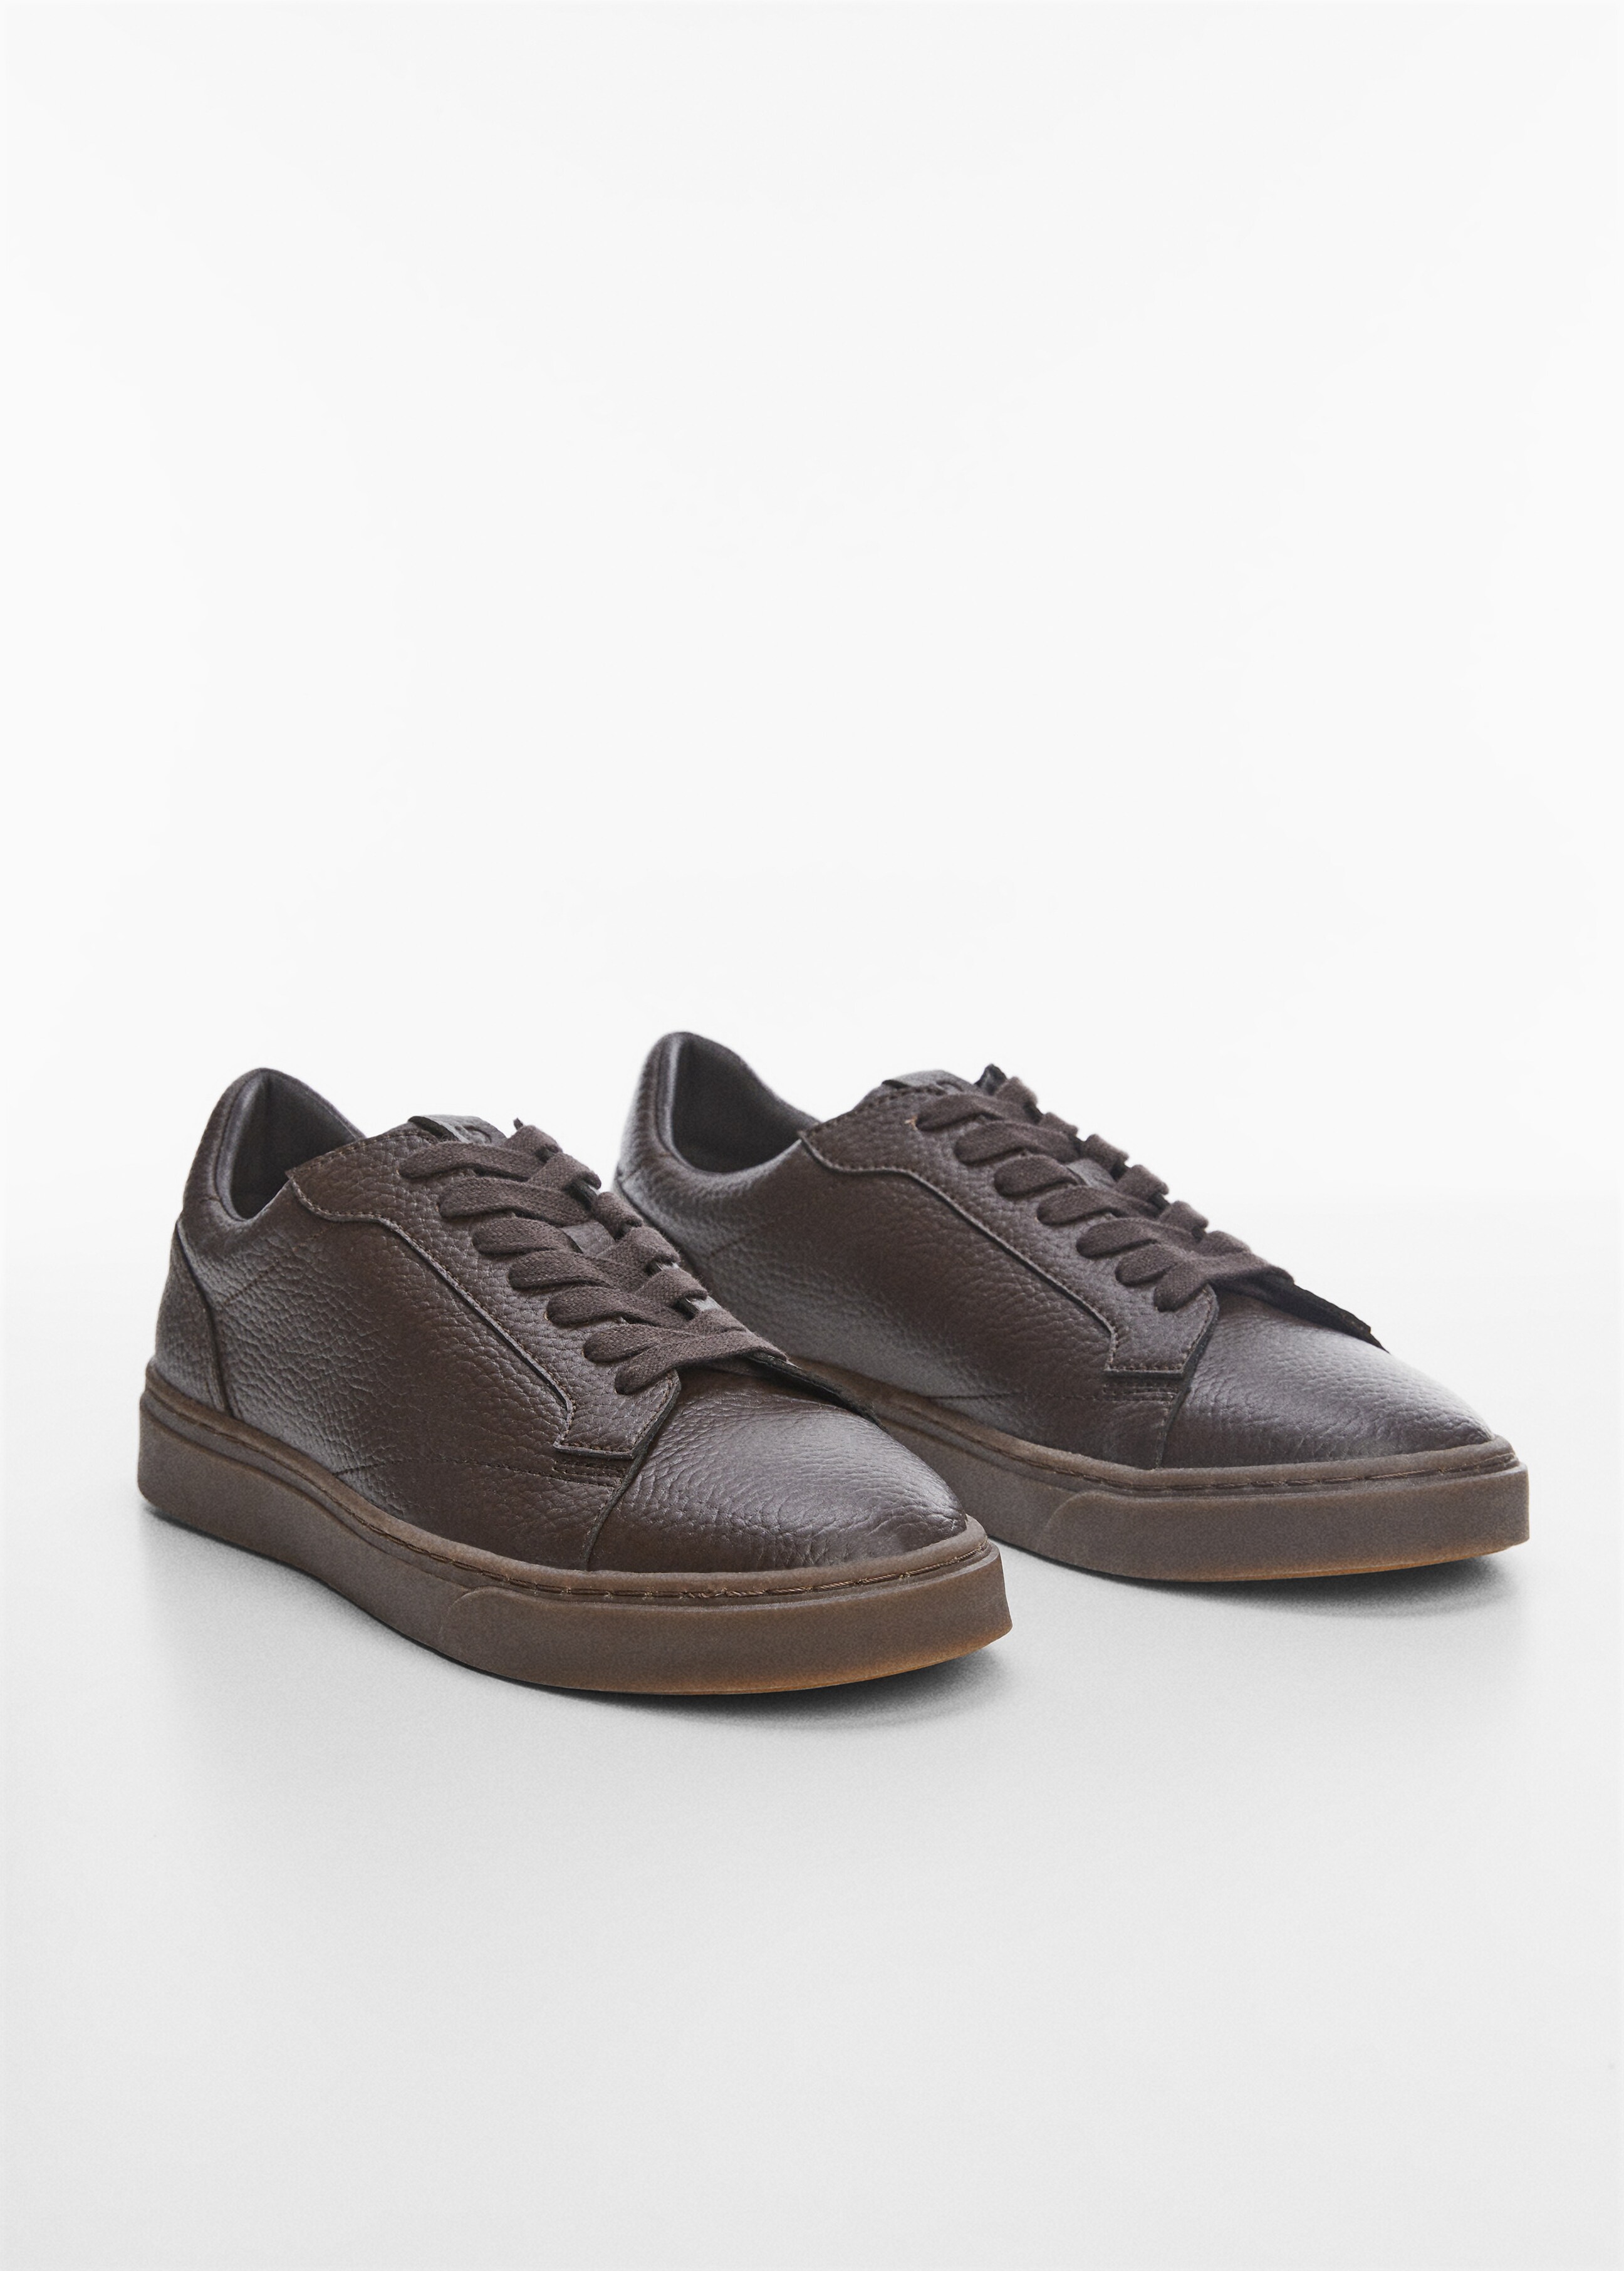 Pebbled leather sneakers - Medium plane